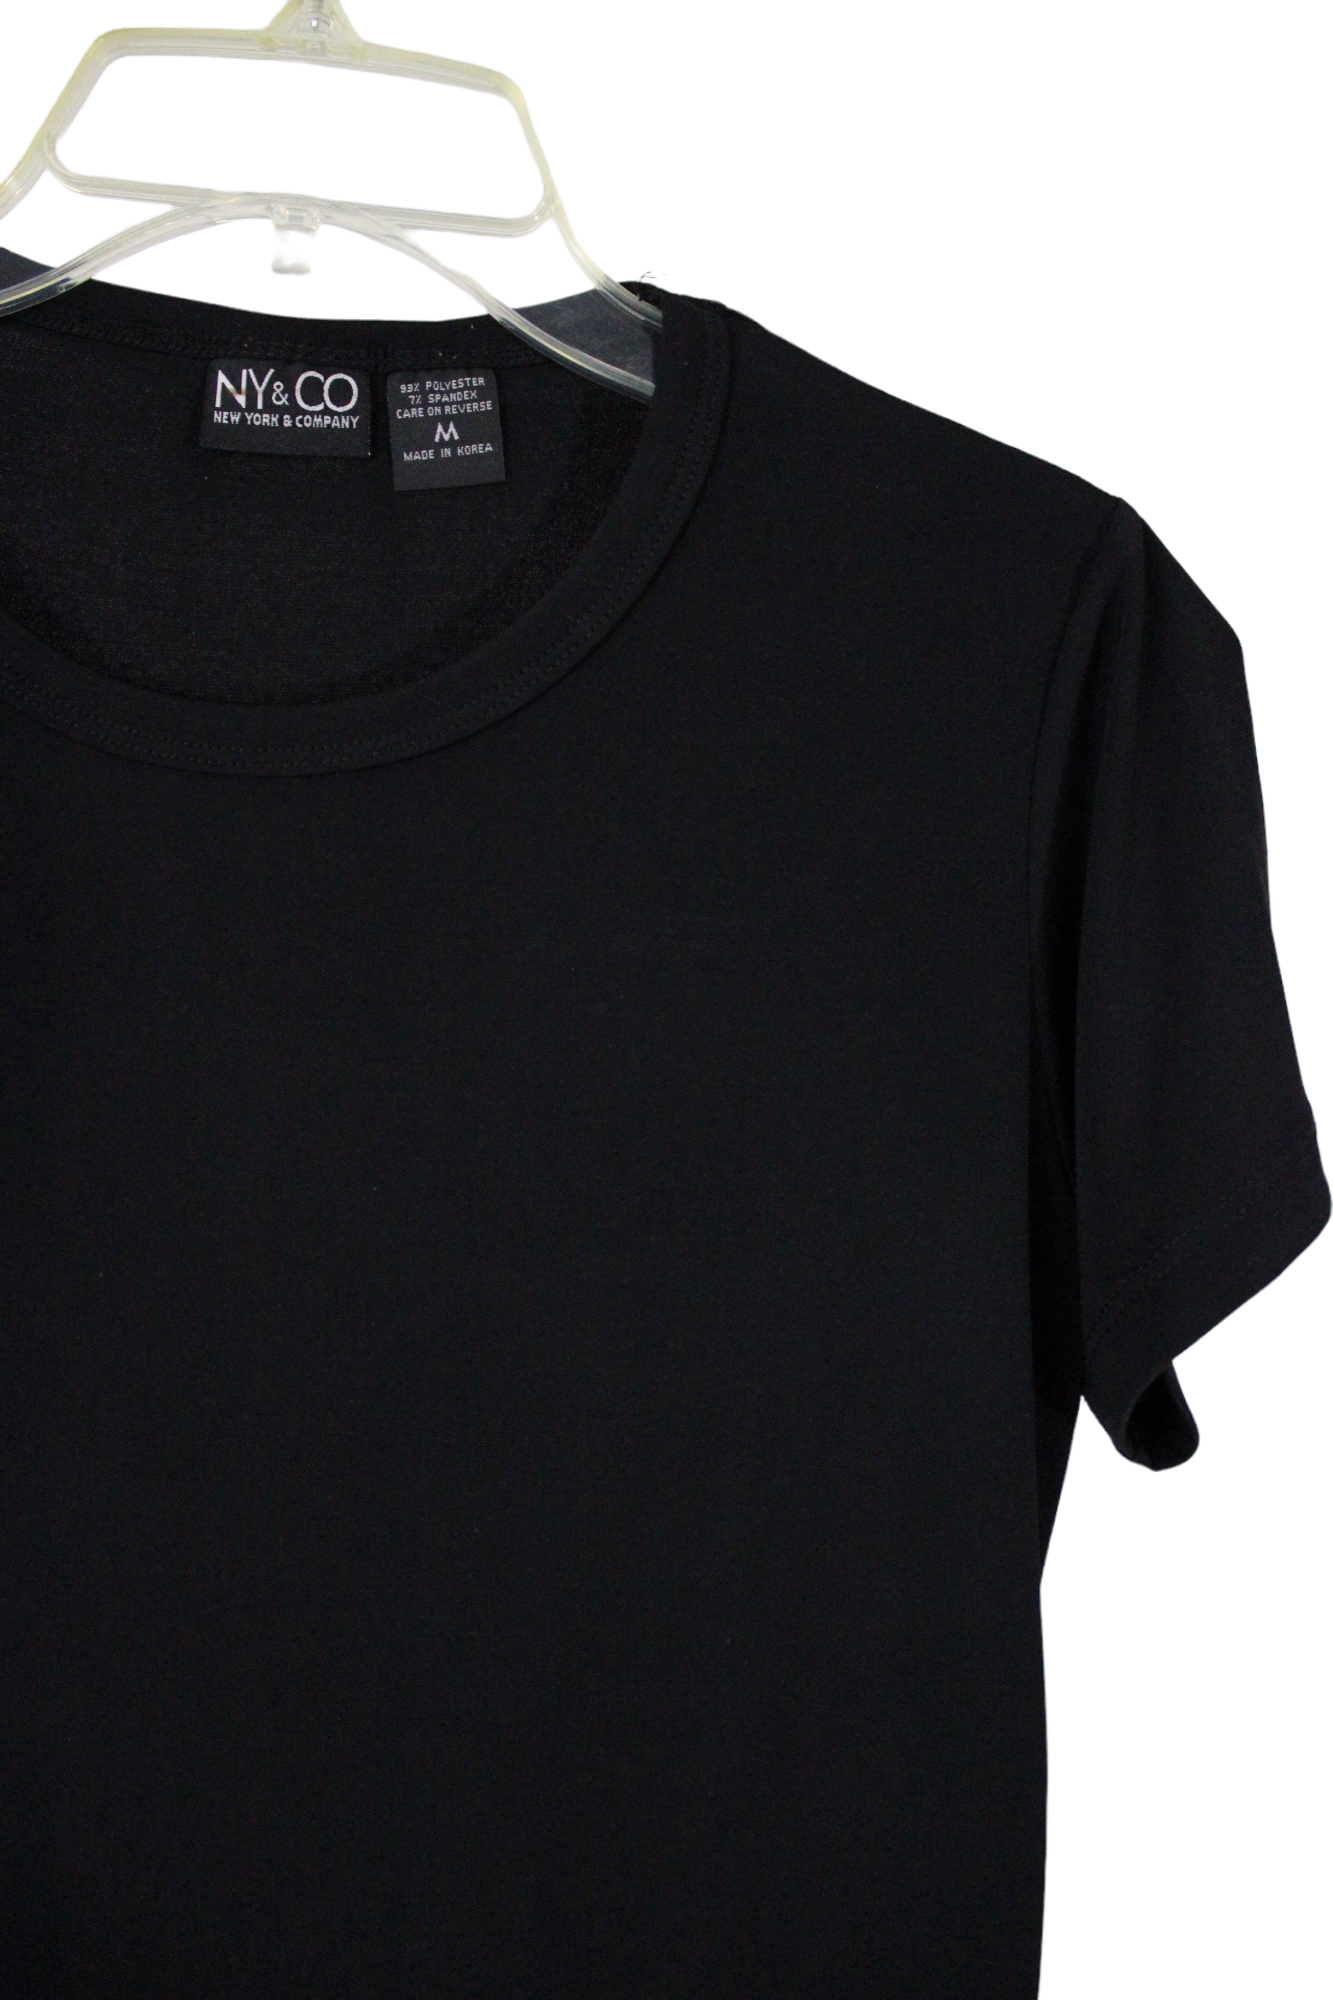 NY&Co. Stretch Black Shirt